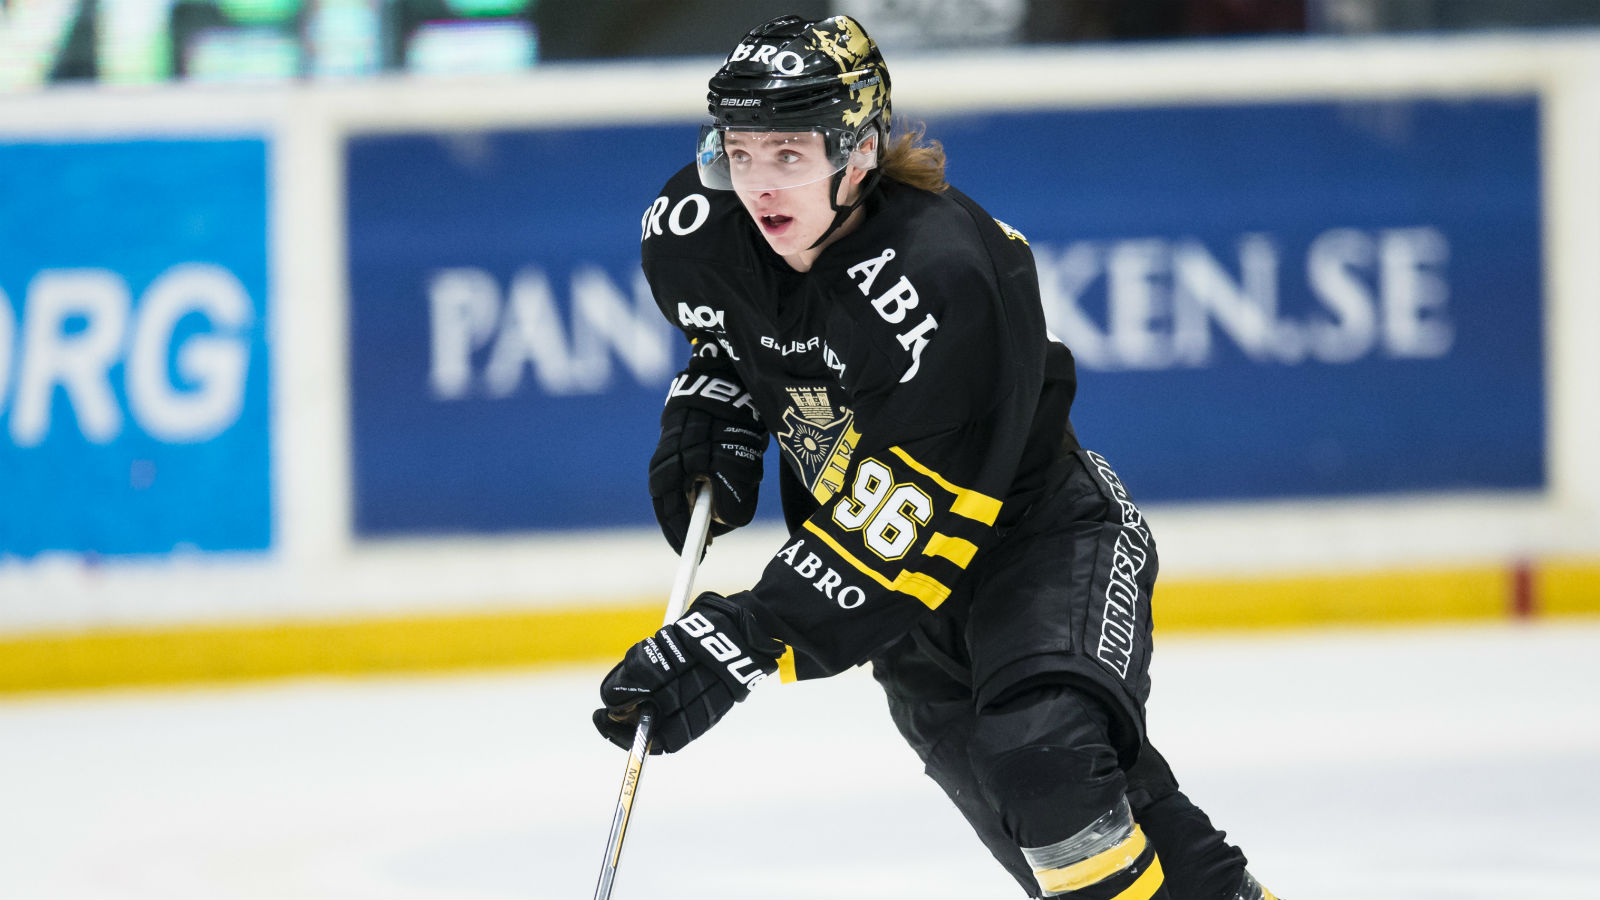 Robin Kovacs - Photo Courtesy of hockeysverige.se